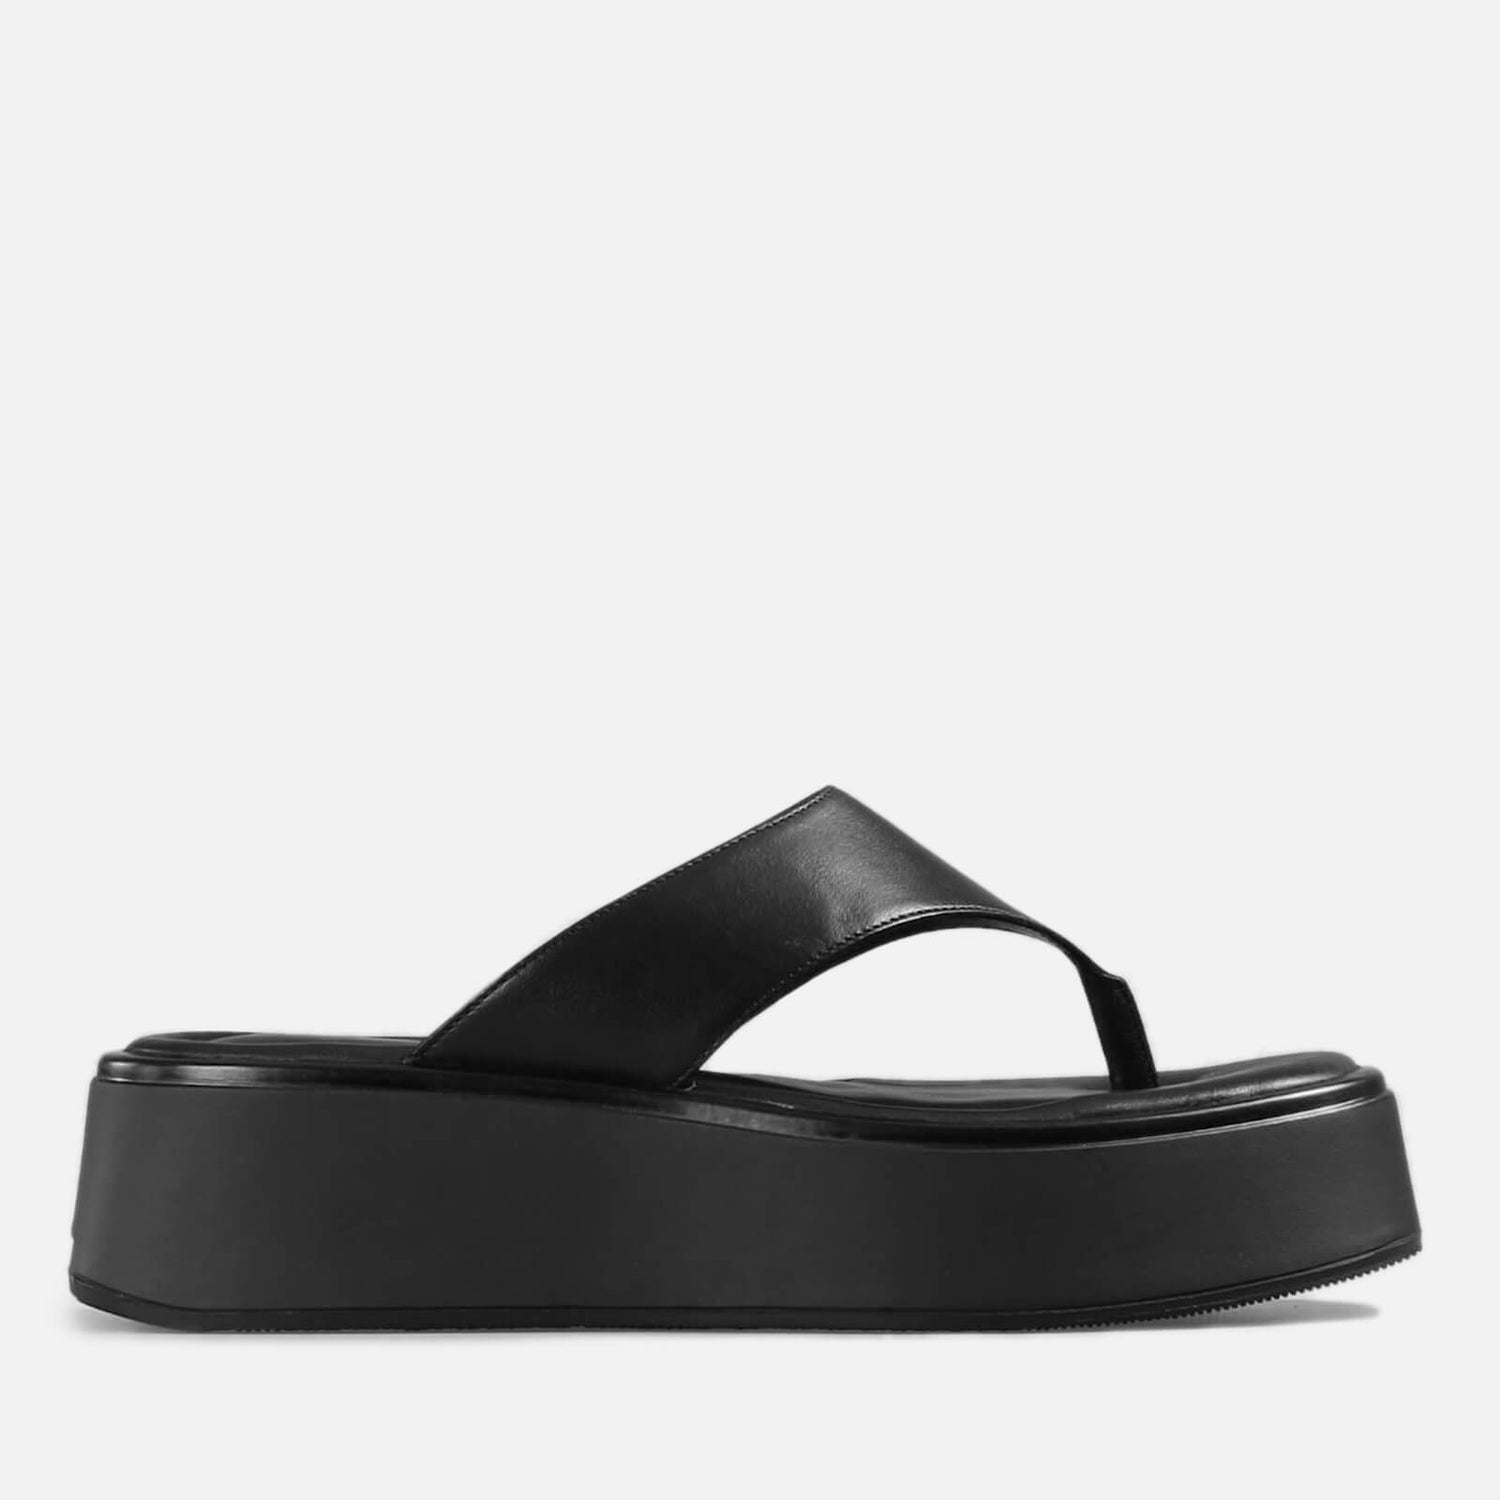 Vagabond Women's Courtney Leather Toe Post Sandals - Black/Black - UK 6